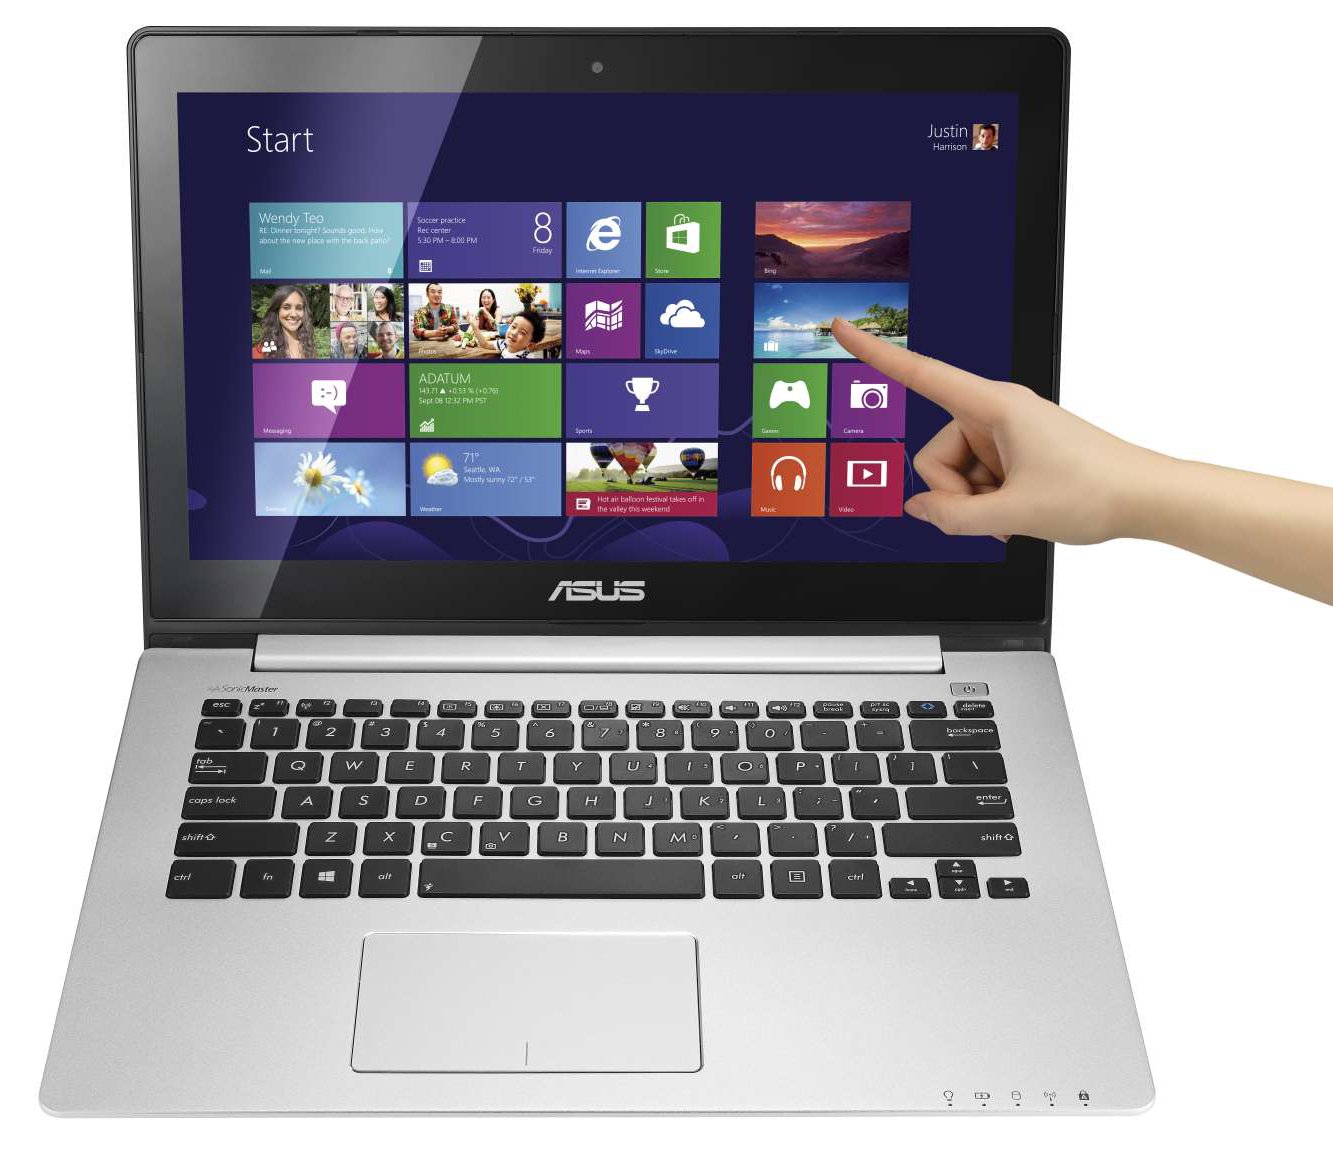 ASUS VivoBook S451LB Notebook